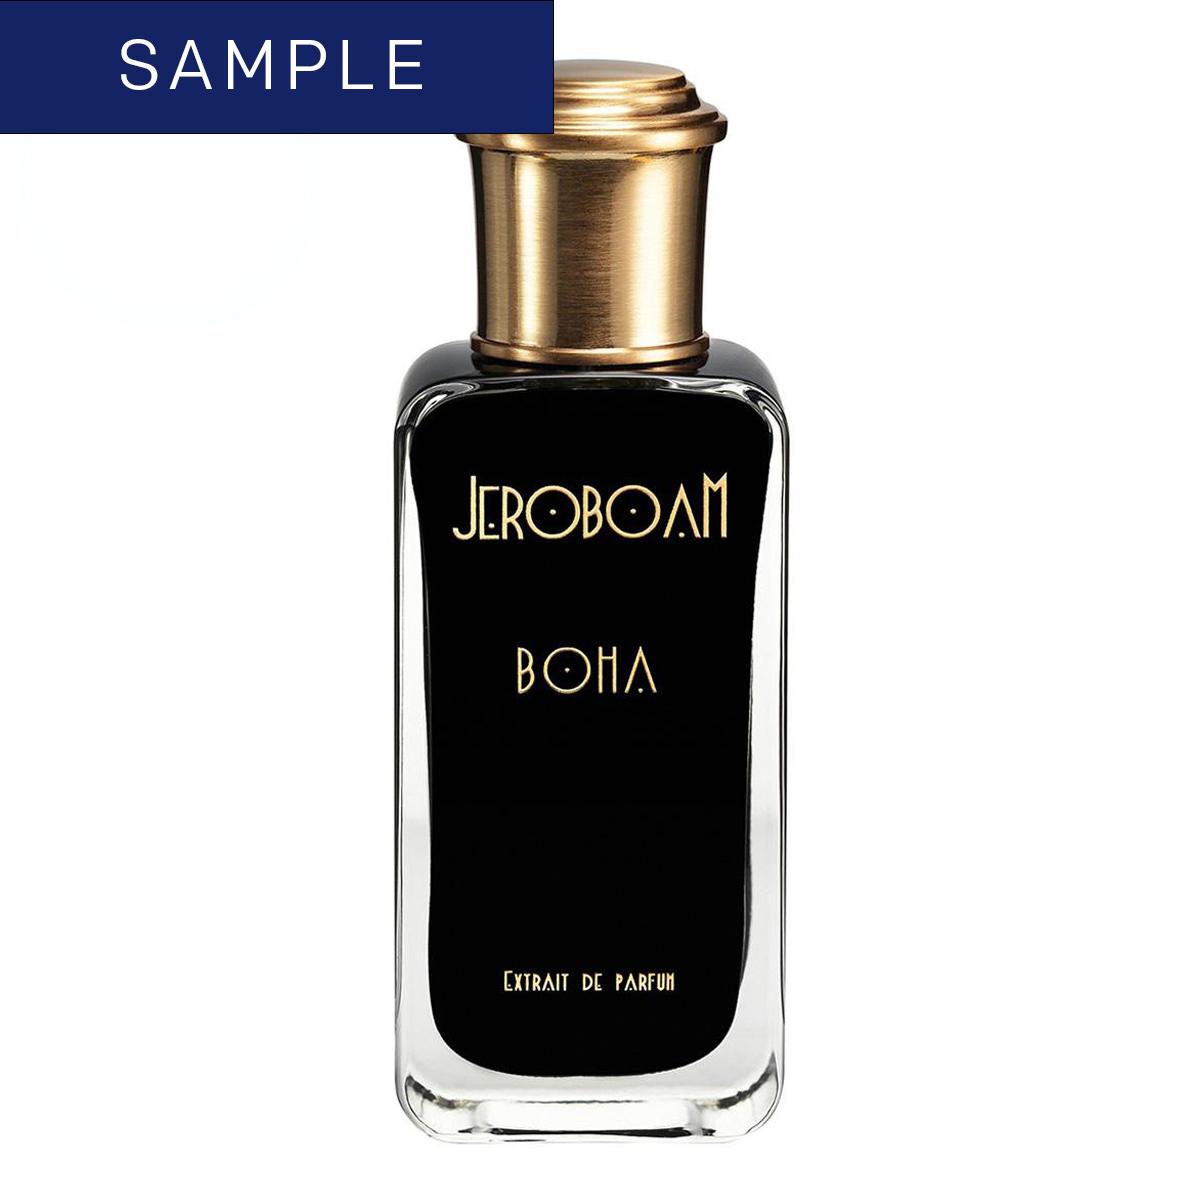 Jeroboam Paris Sample - Boha Extrait de Parfum (0.3 ml vial) #10081997